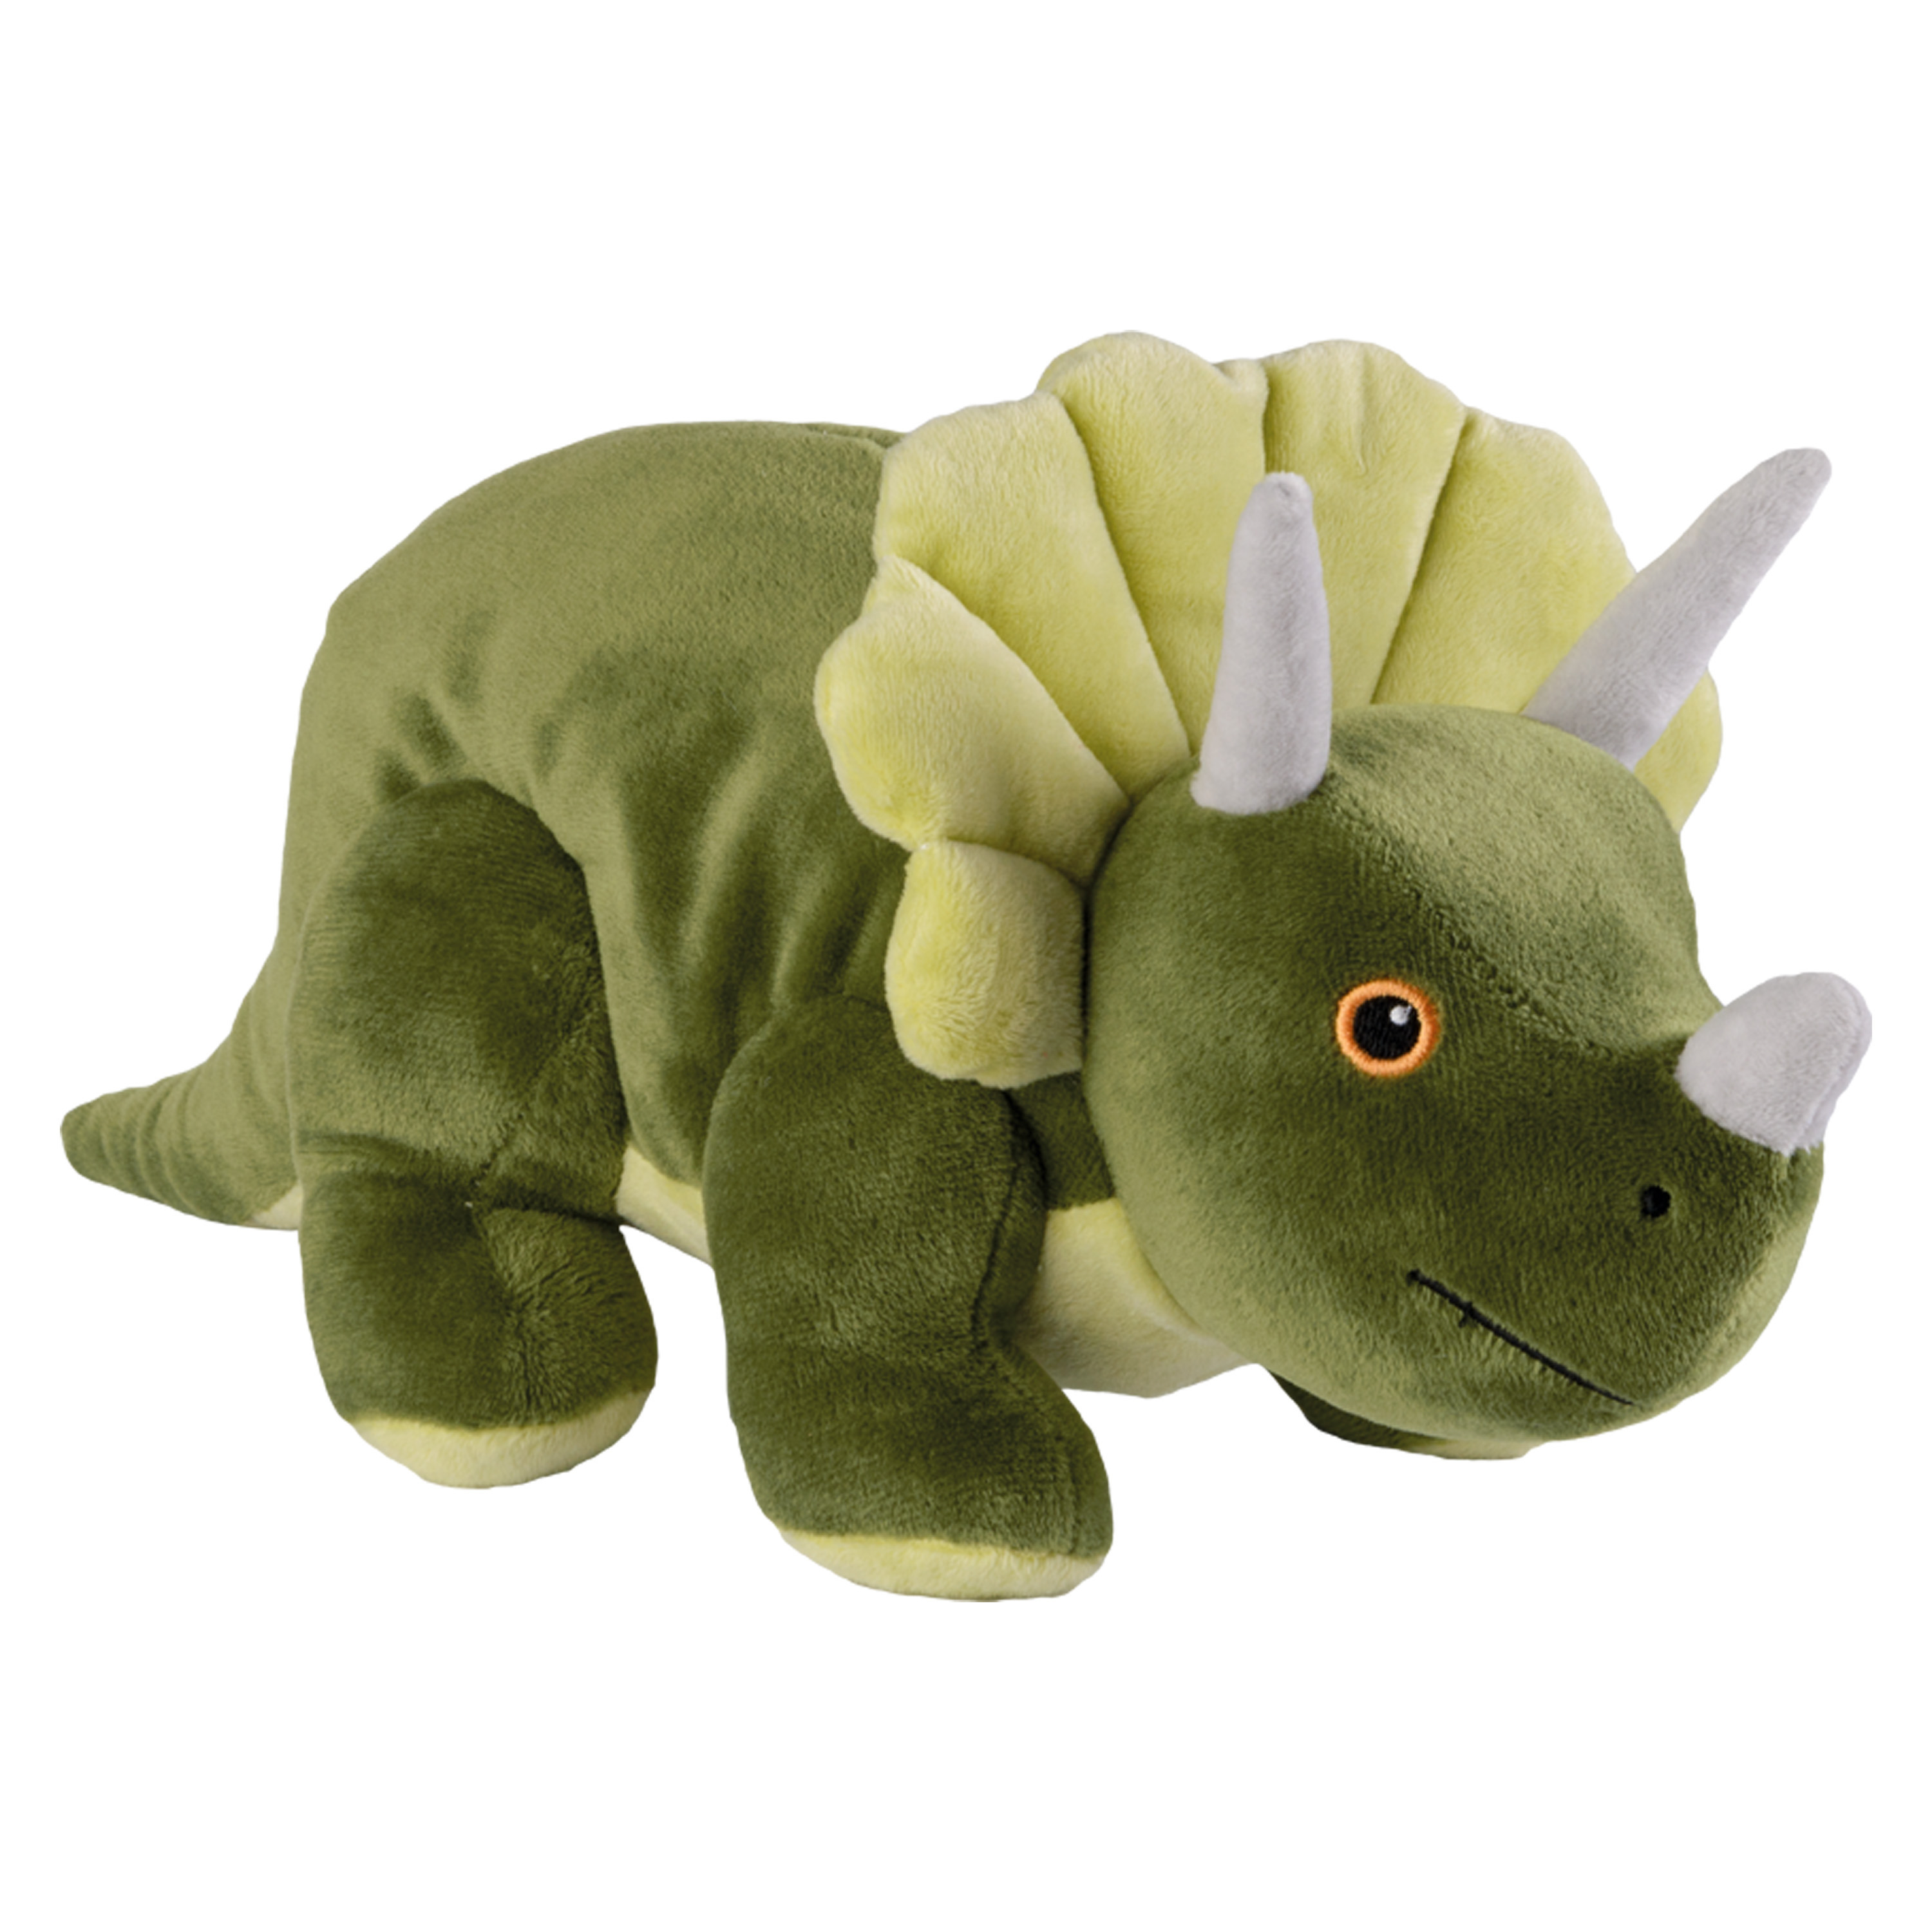 Warmies Warmte-magnetron opwarm knuffel Dinosaurus-Triceratops groen 35 cm pittenzak